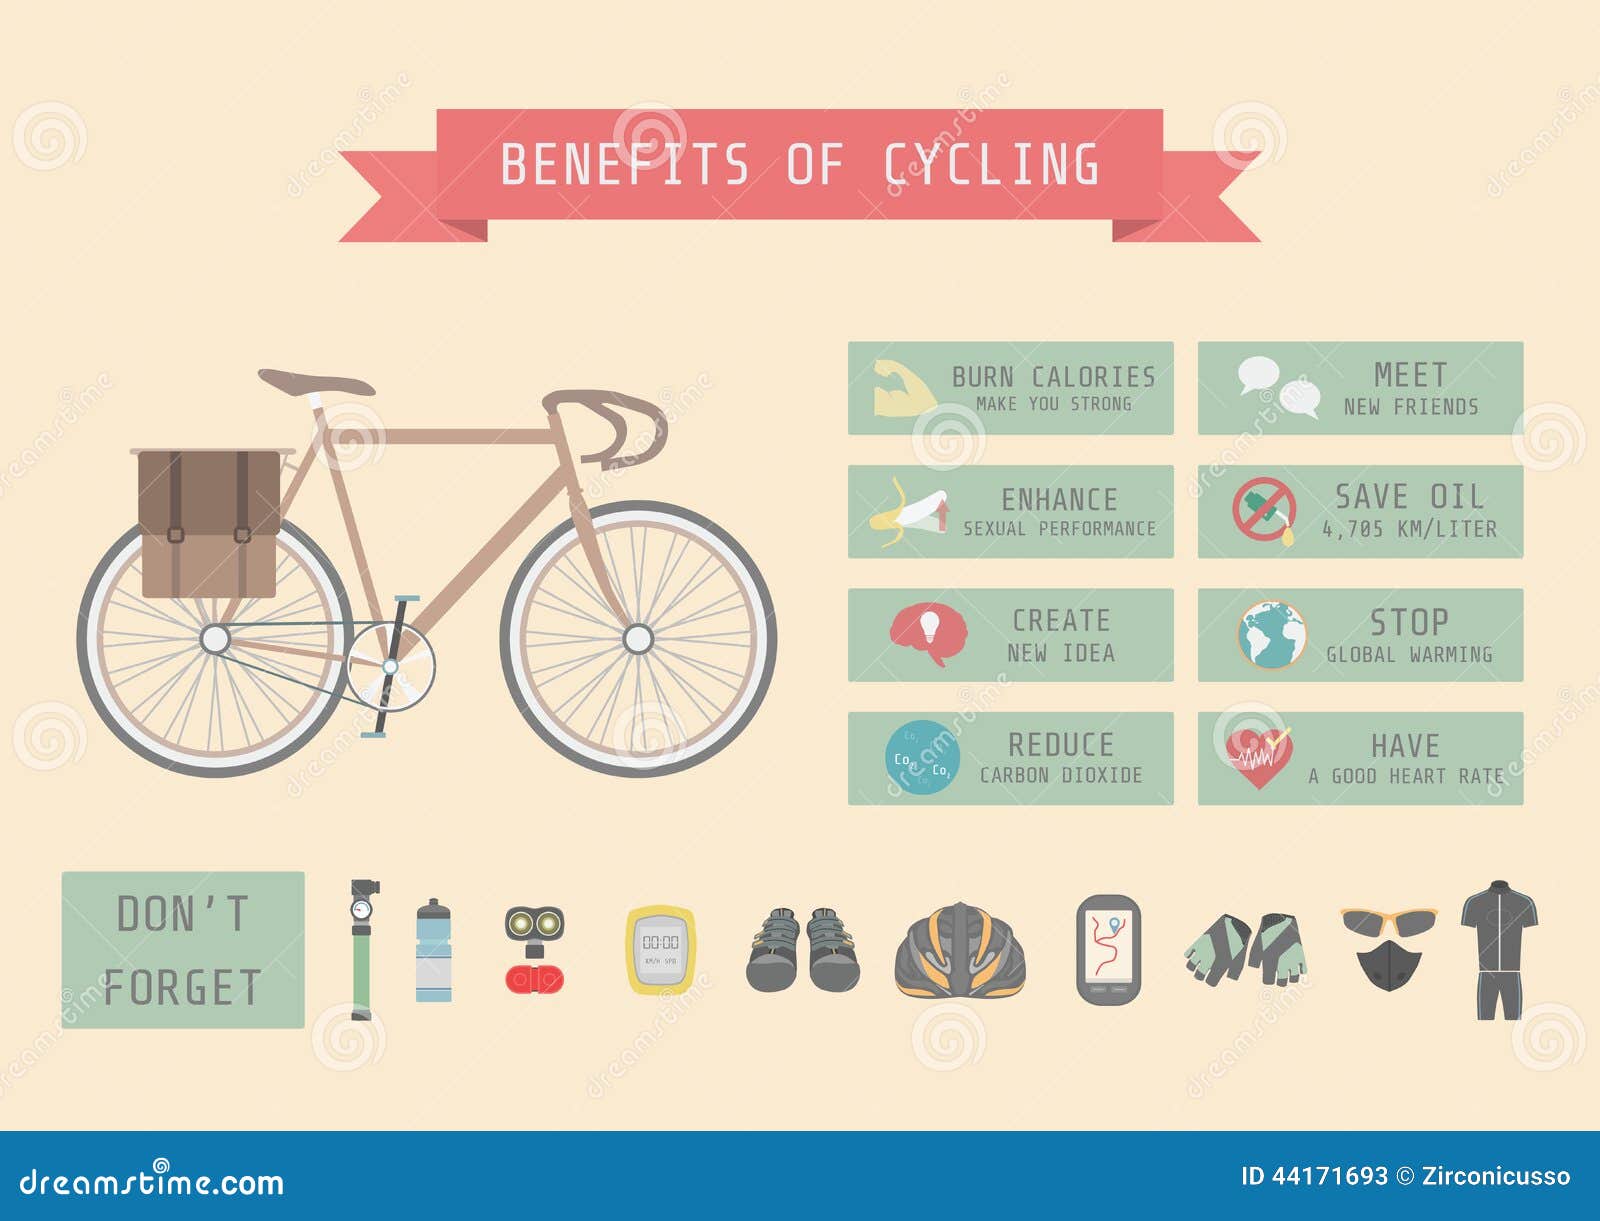 Bikes Benefit Stock Illustration Image 44171693 regarding Stylish  cycling bike benefits regarding Your house